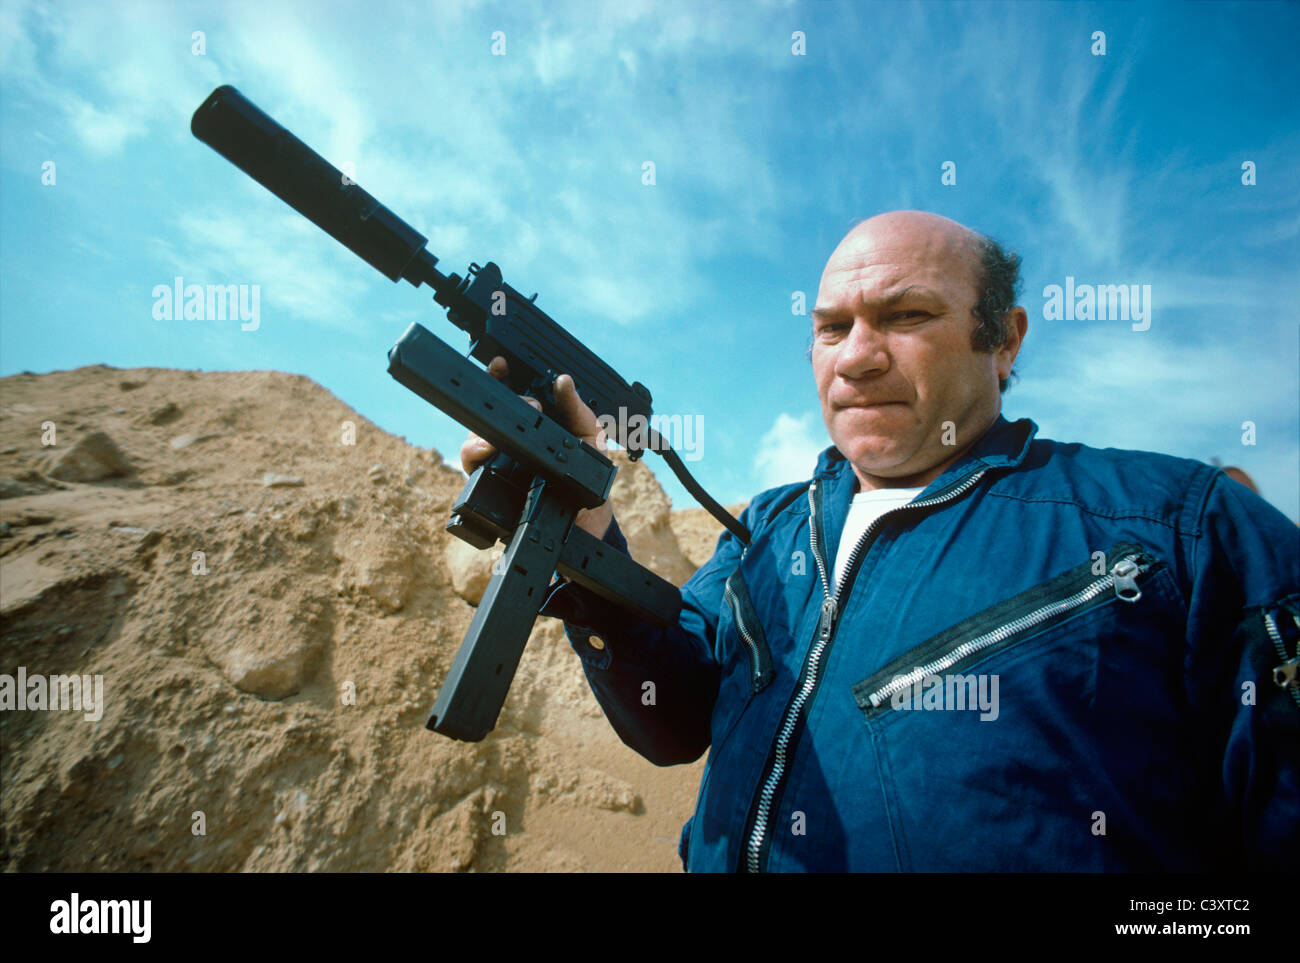 Uziel Gal, the designer and namesake of the Uzi submachine gun, holding a mini-uzi pistol with a crossed magazine. Israel Stock Photo